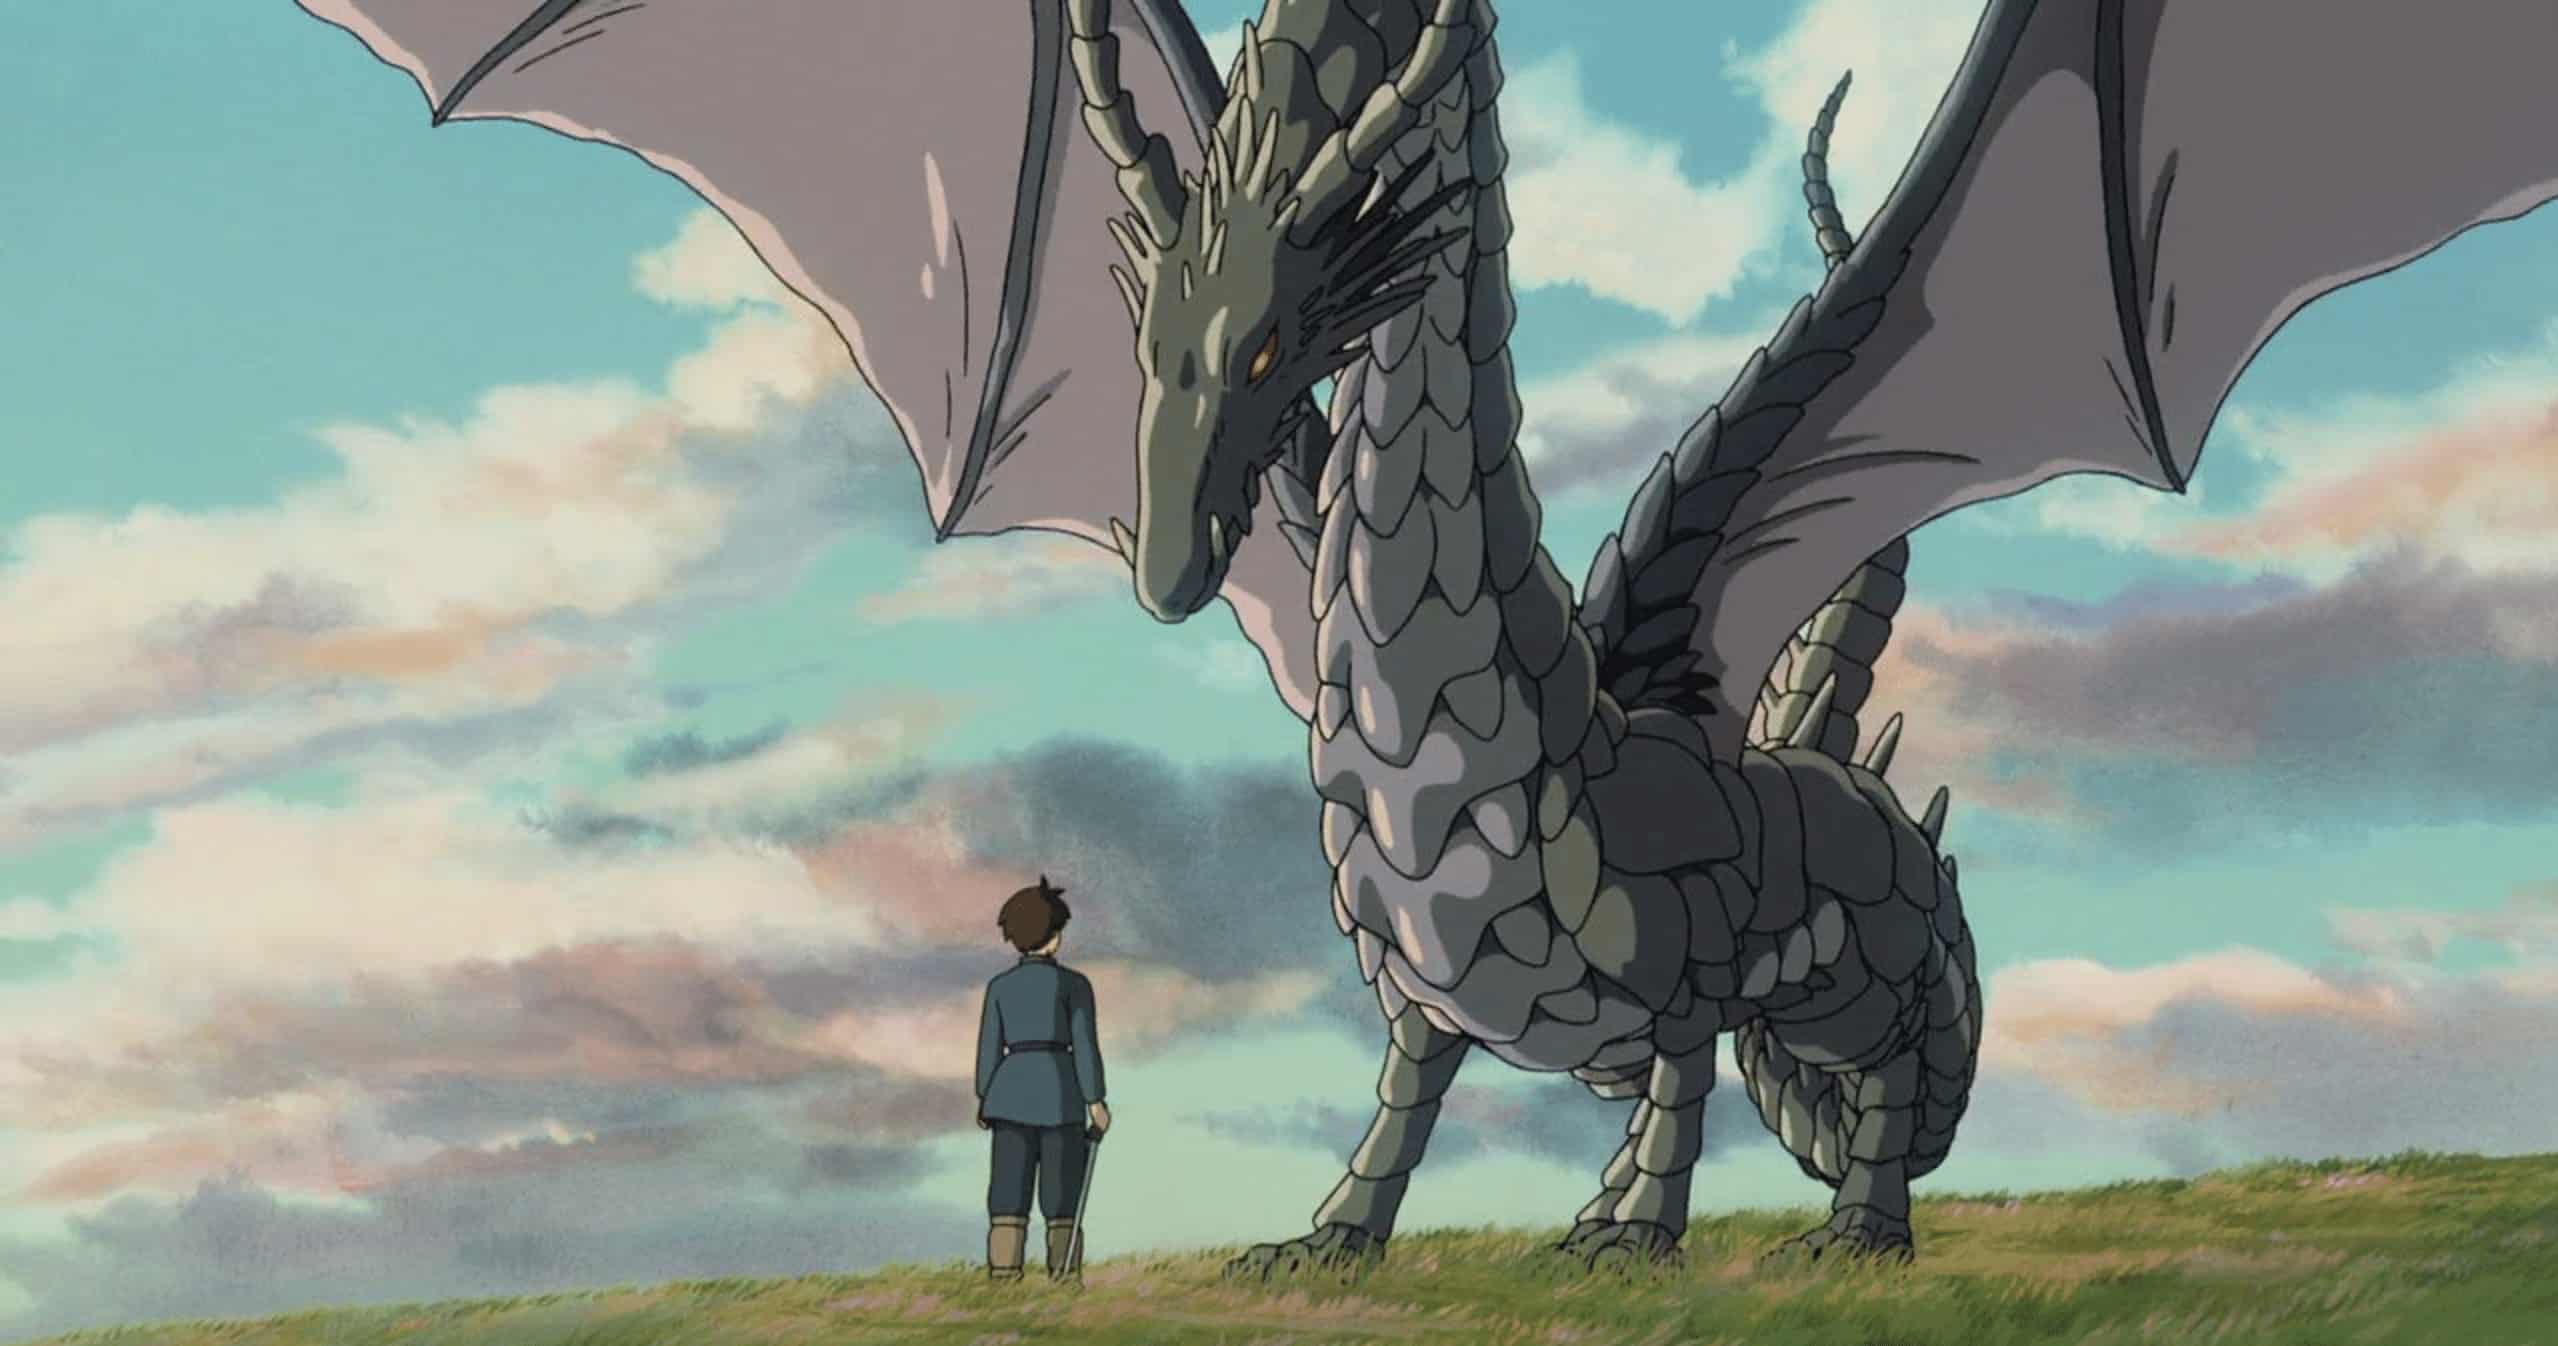 A scene in Studio Ghibli's movie adaptation of Earthsea